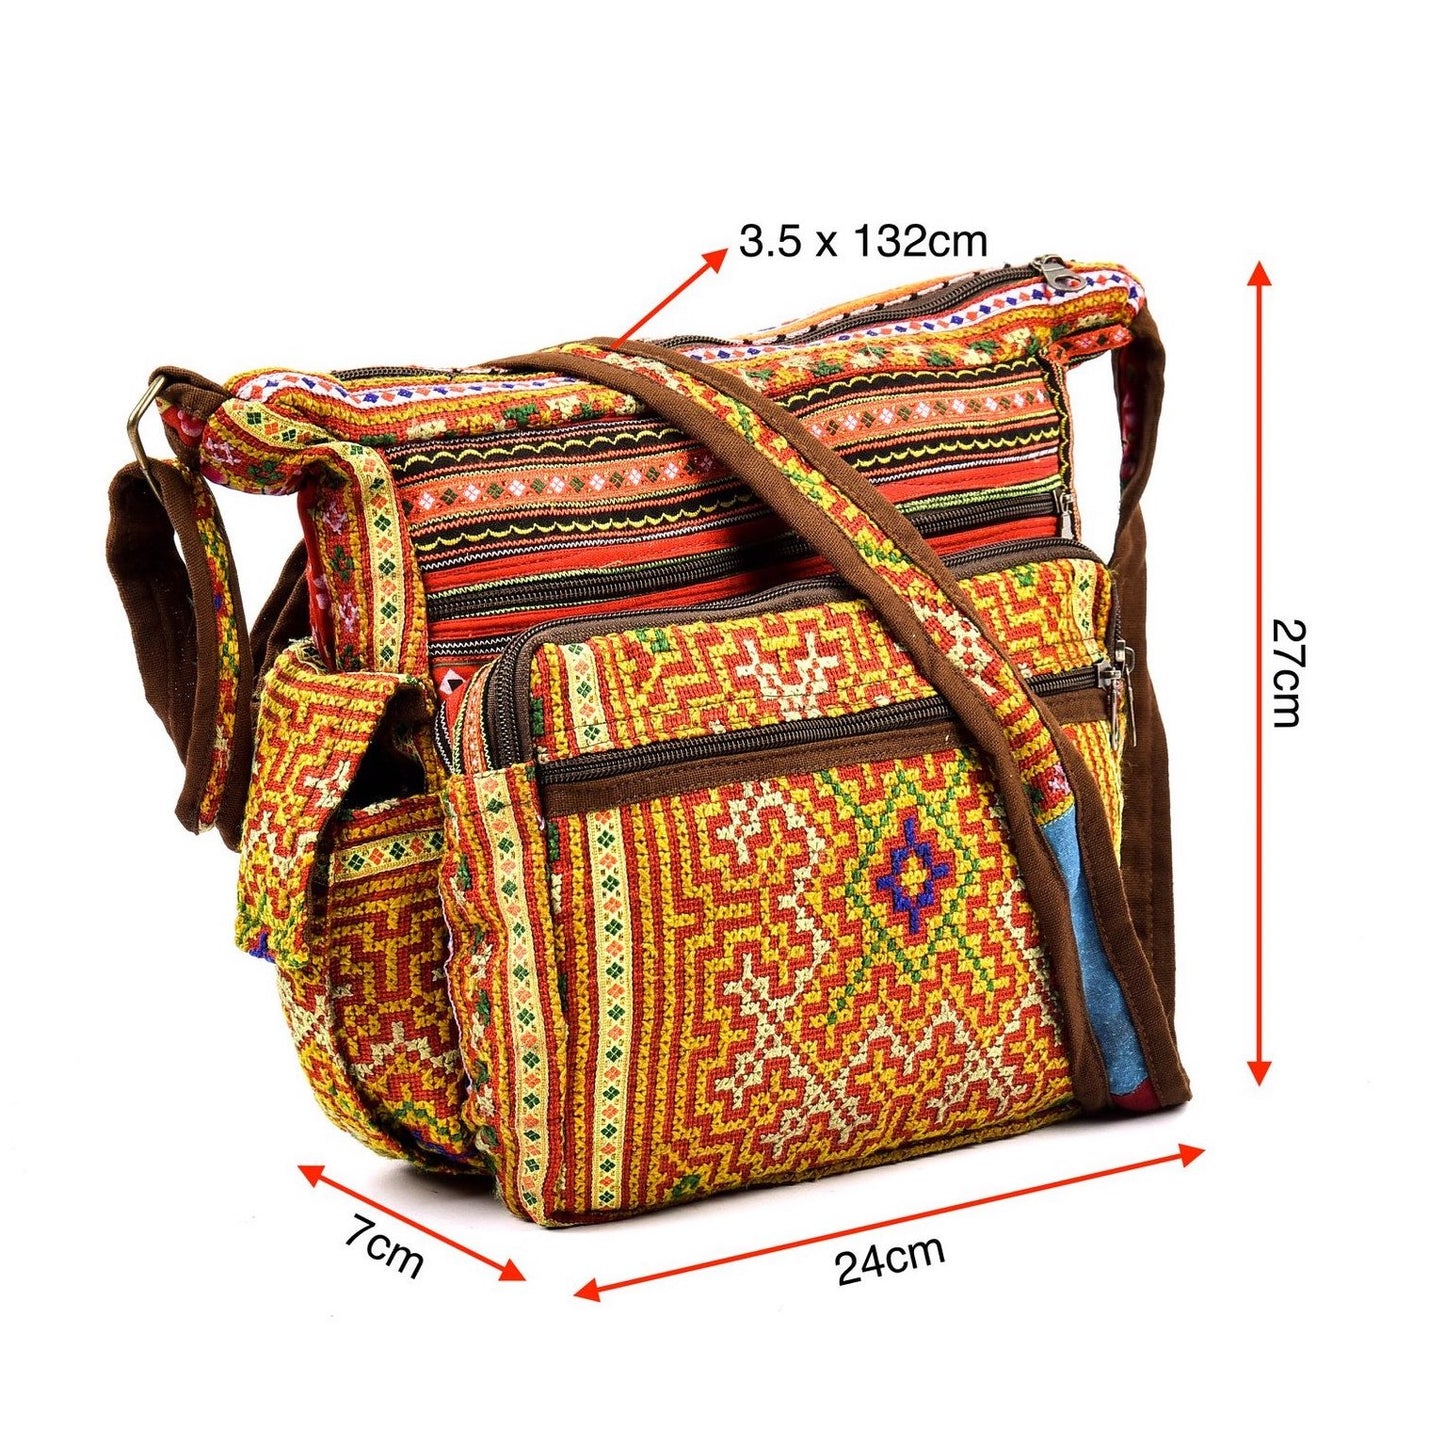 Boho-style linen, embroidery cross-body bag, H'mong tribal pattern in ORANGE